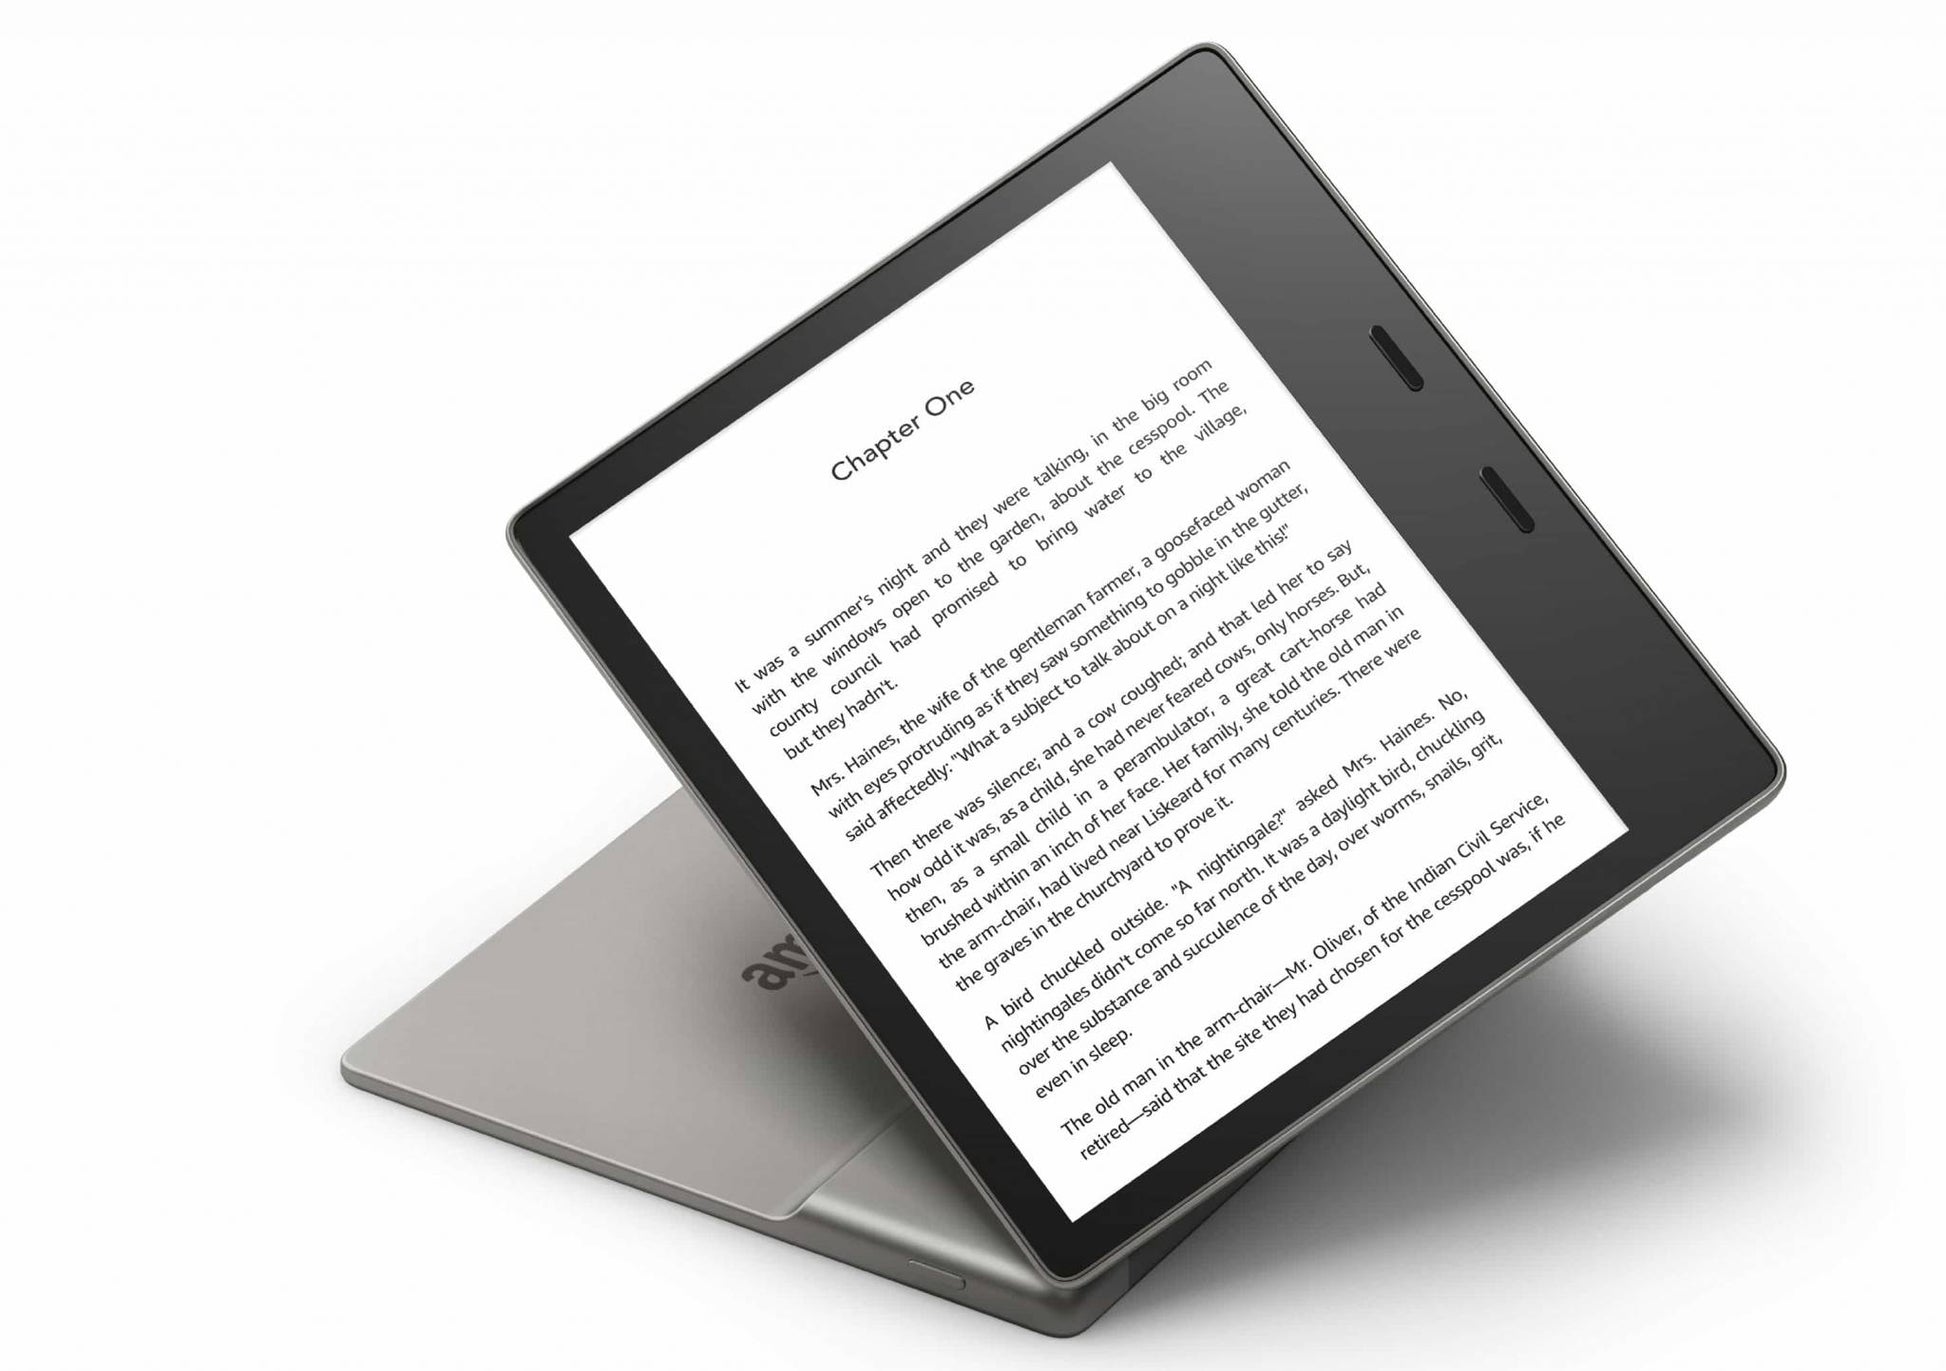 Kindle Oasis 3 with adjustable warm light (32GB) 